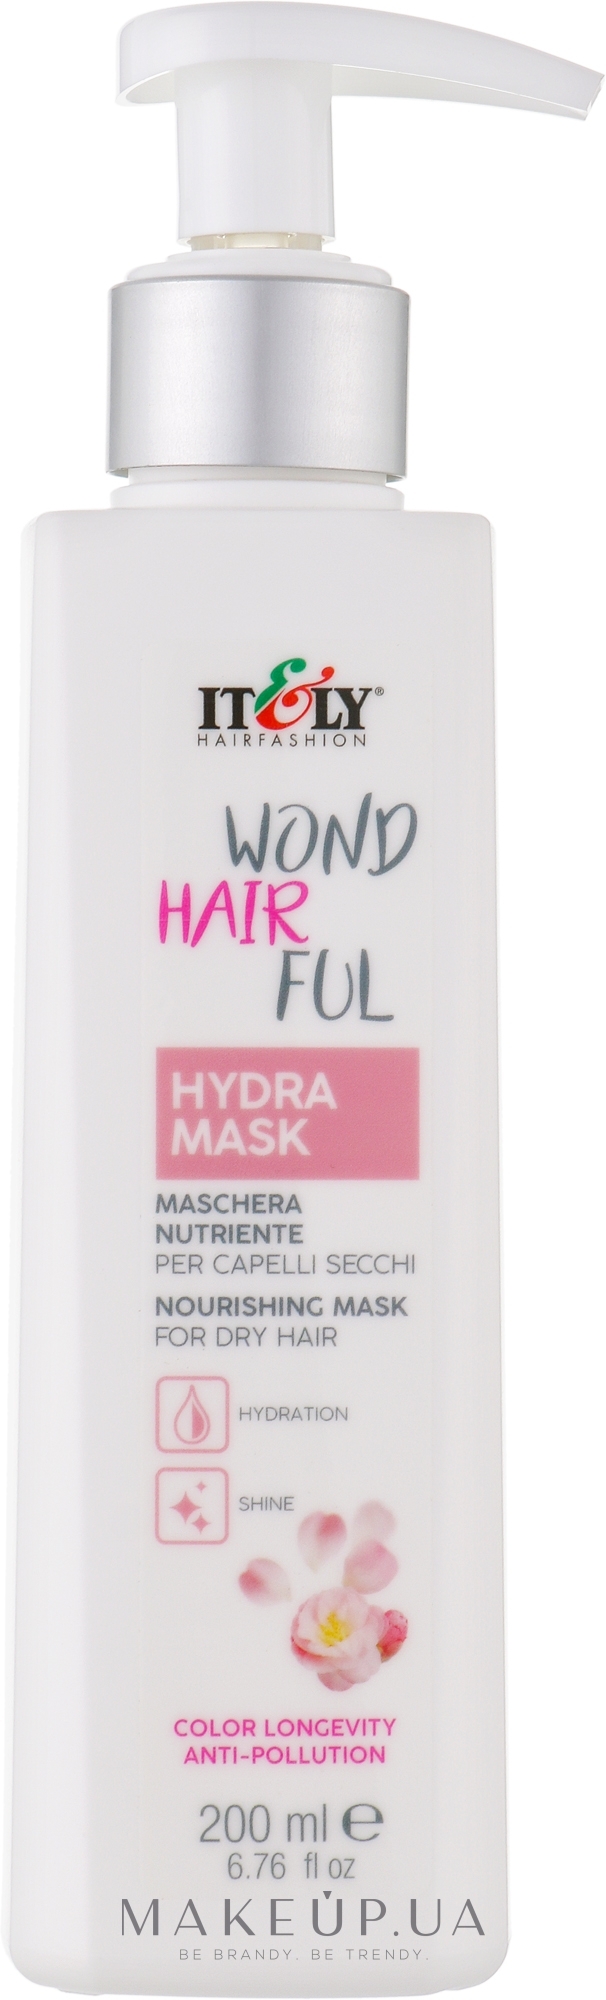 Питательная маска для волос - Itely Hairfashion WondHairFul Hydra Mask — фото 200ml